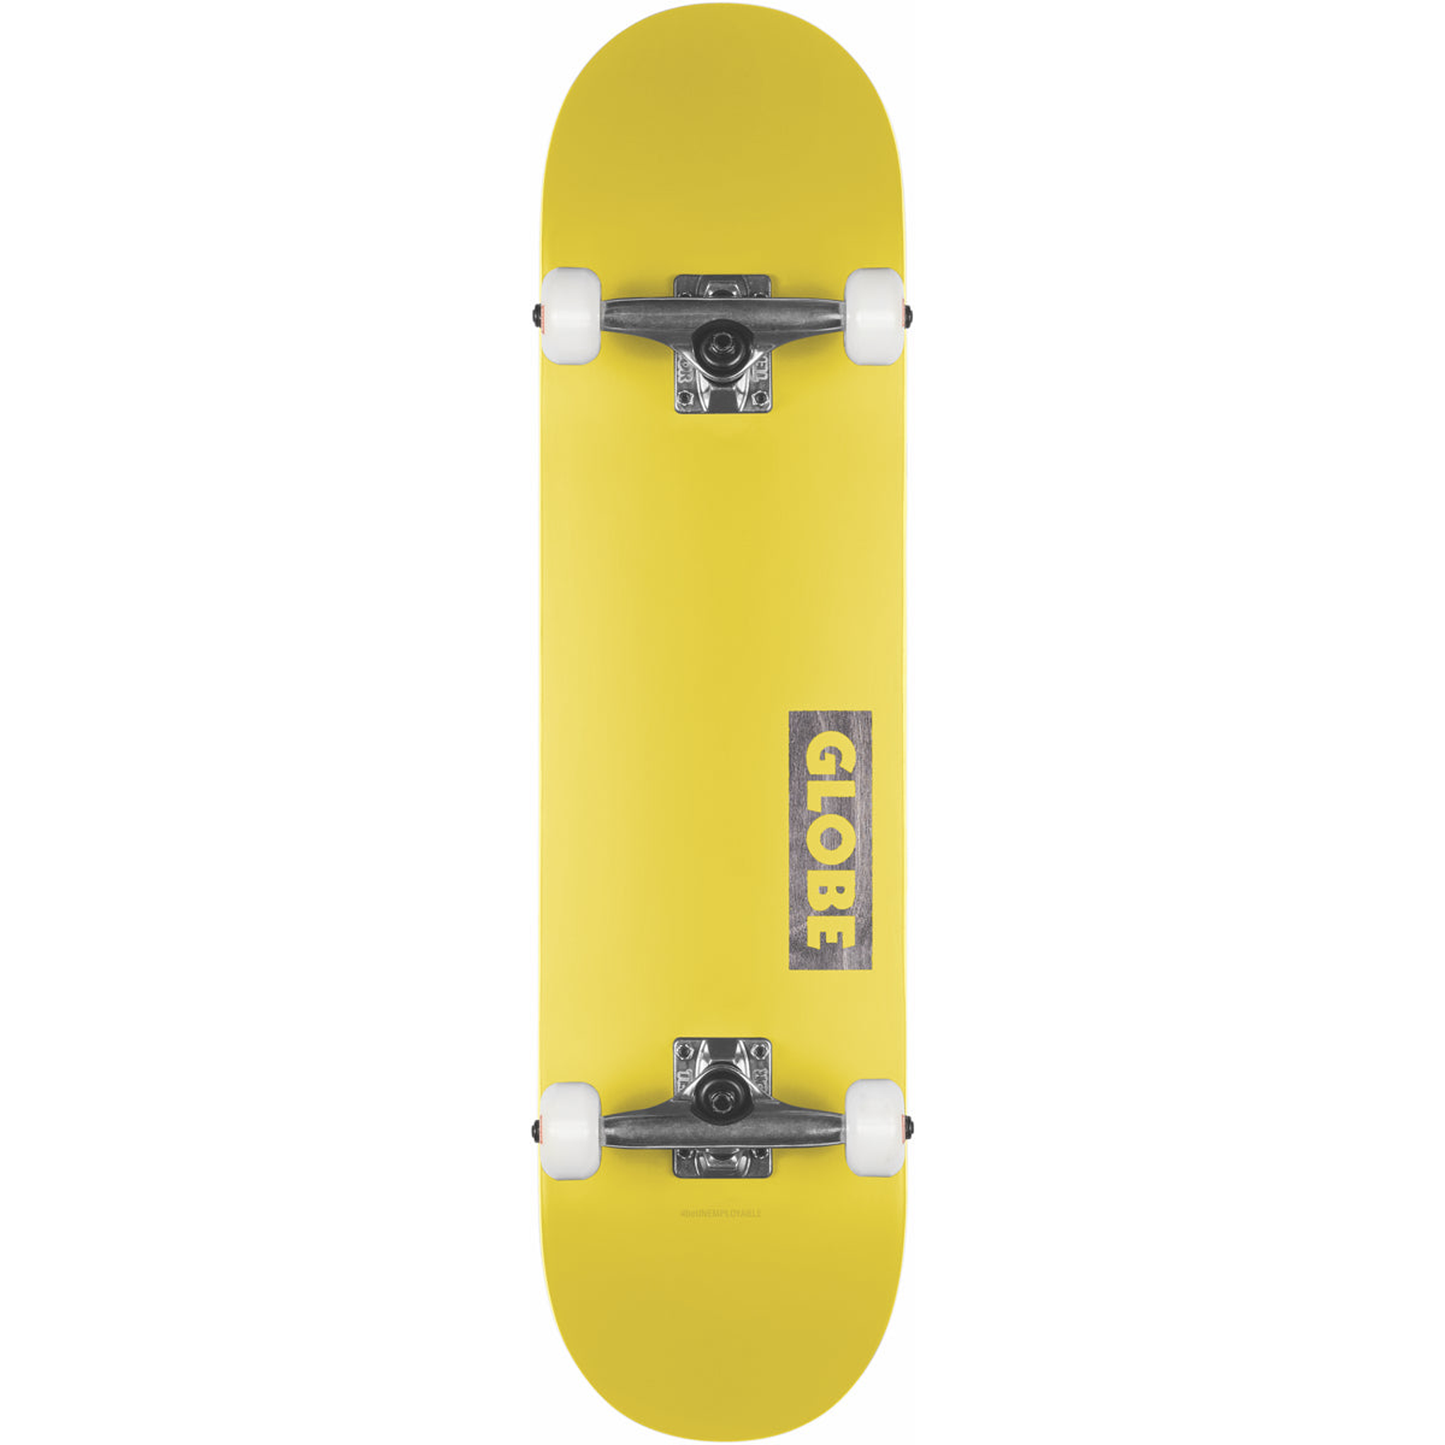 Globe Goodstock pre-built skateboard, 7.75" in the colour neon yellow. 